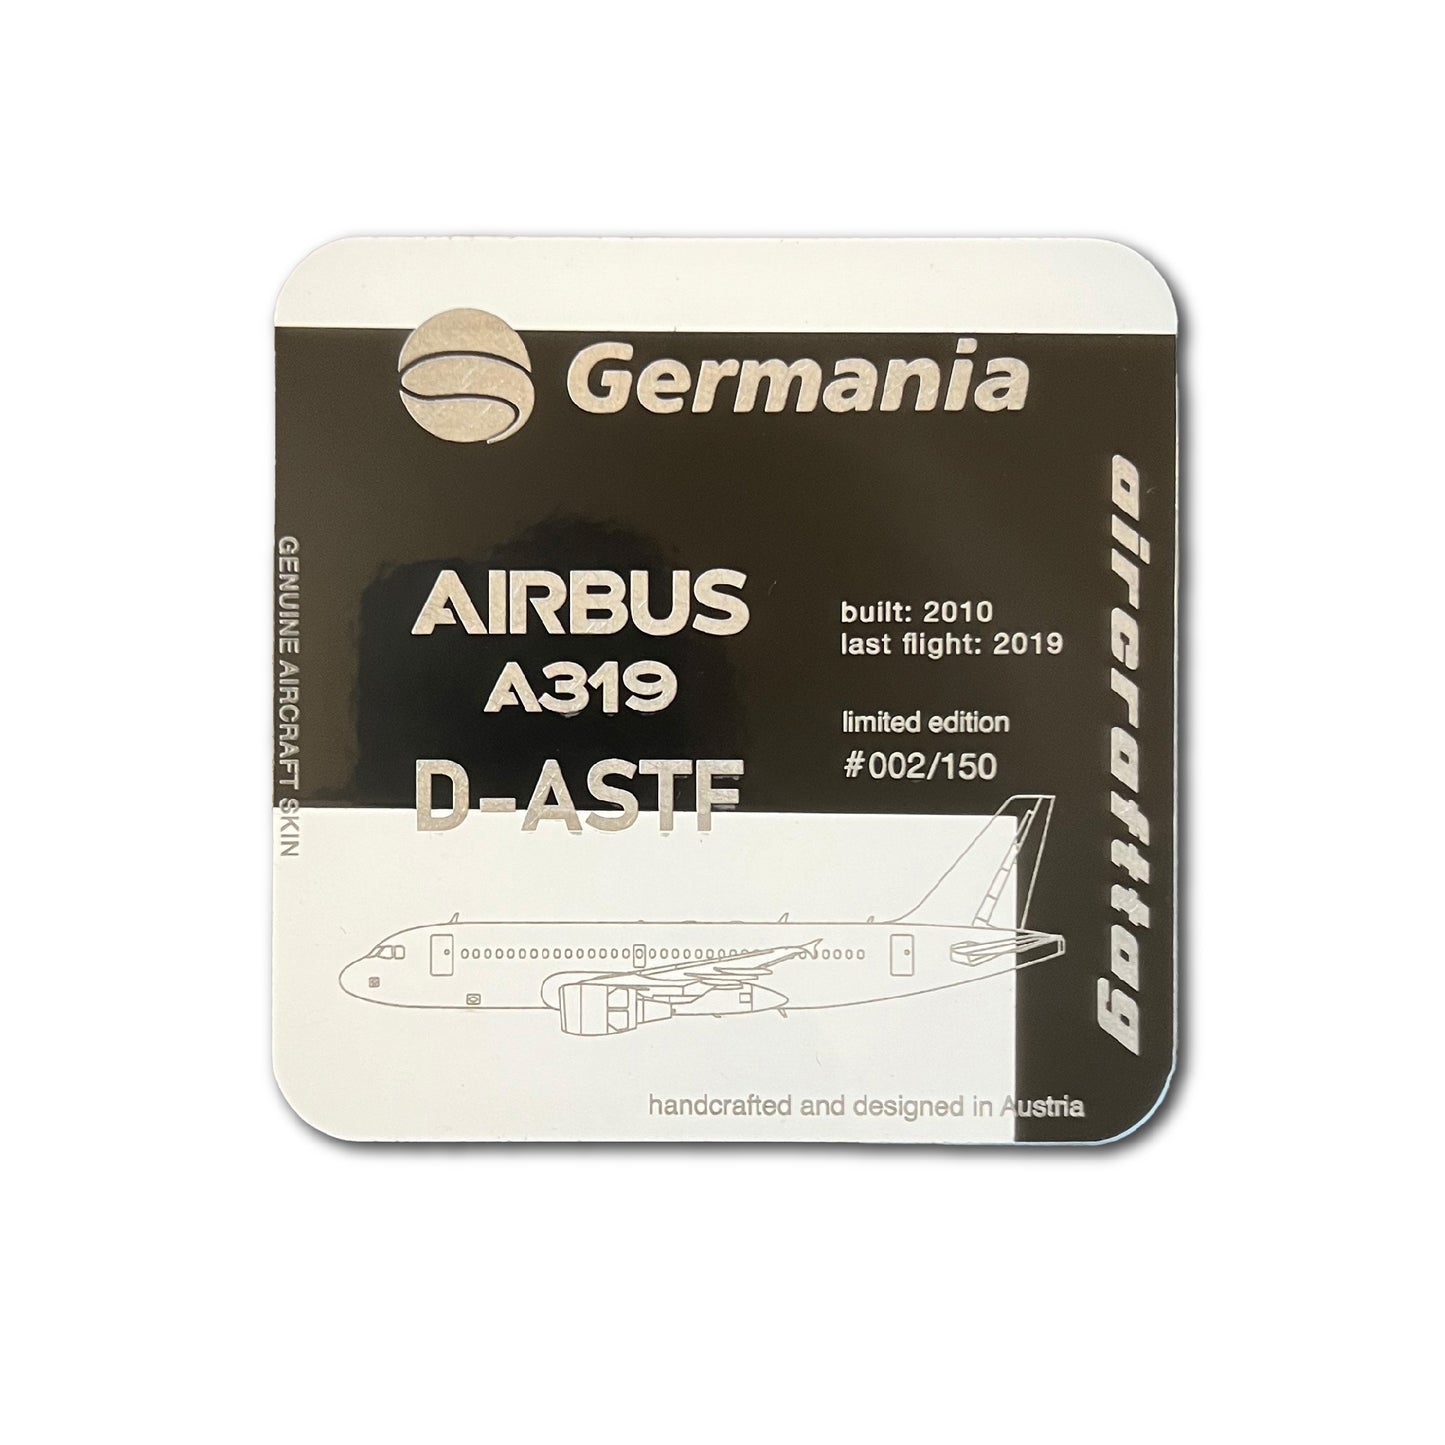 Coaster Airbus A319 - Germania - D-ASTF